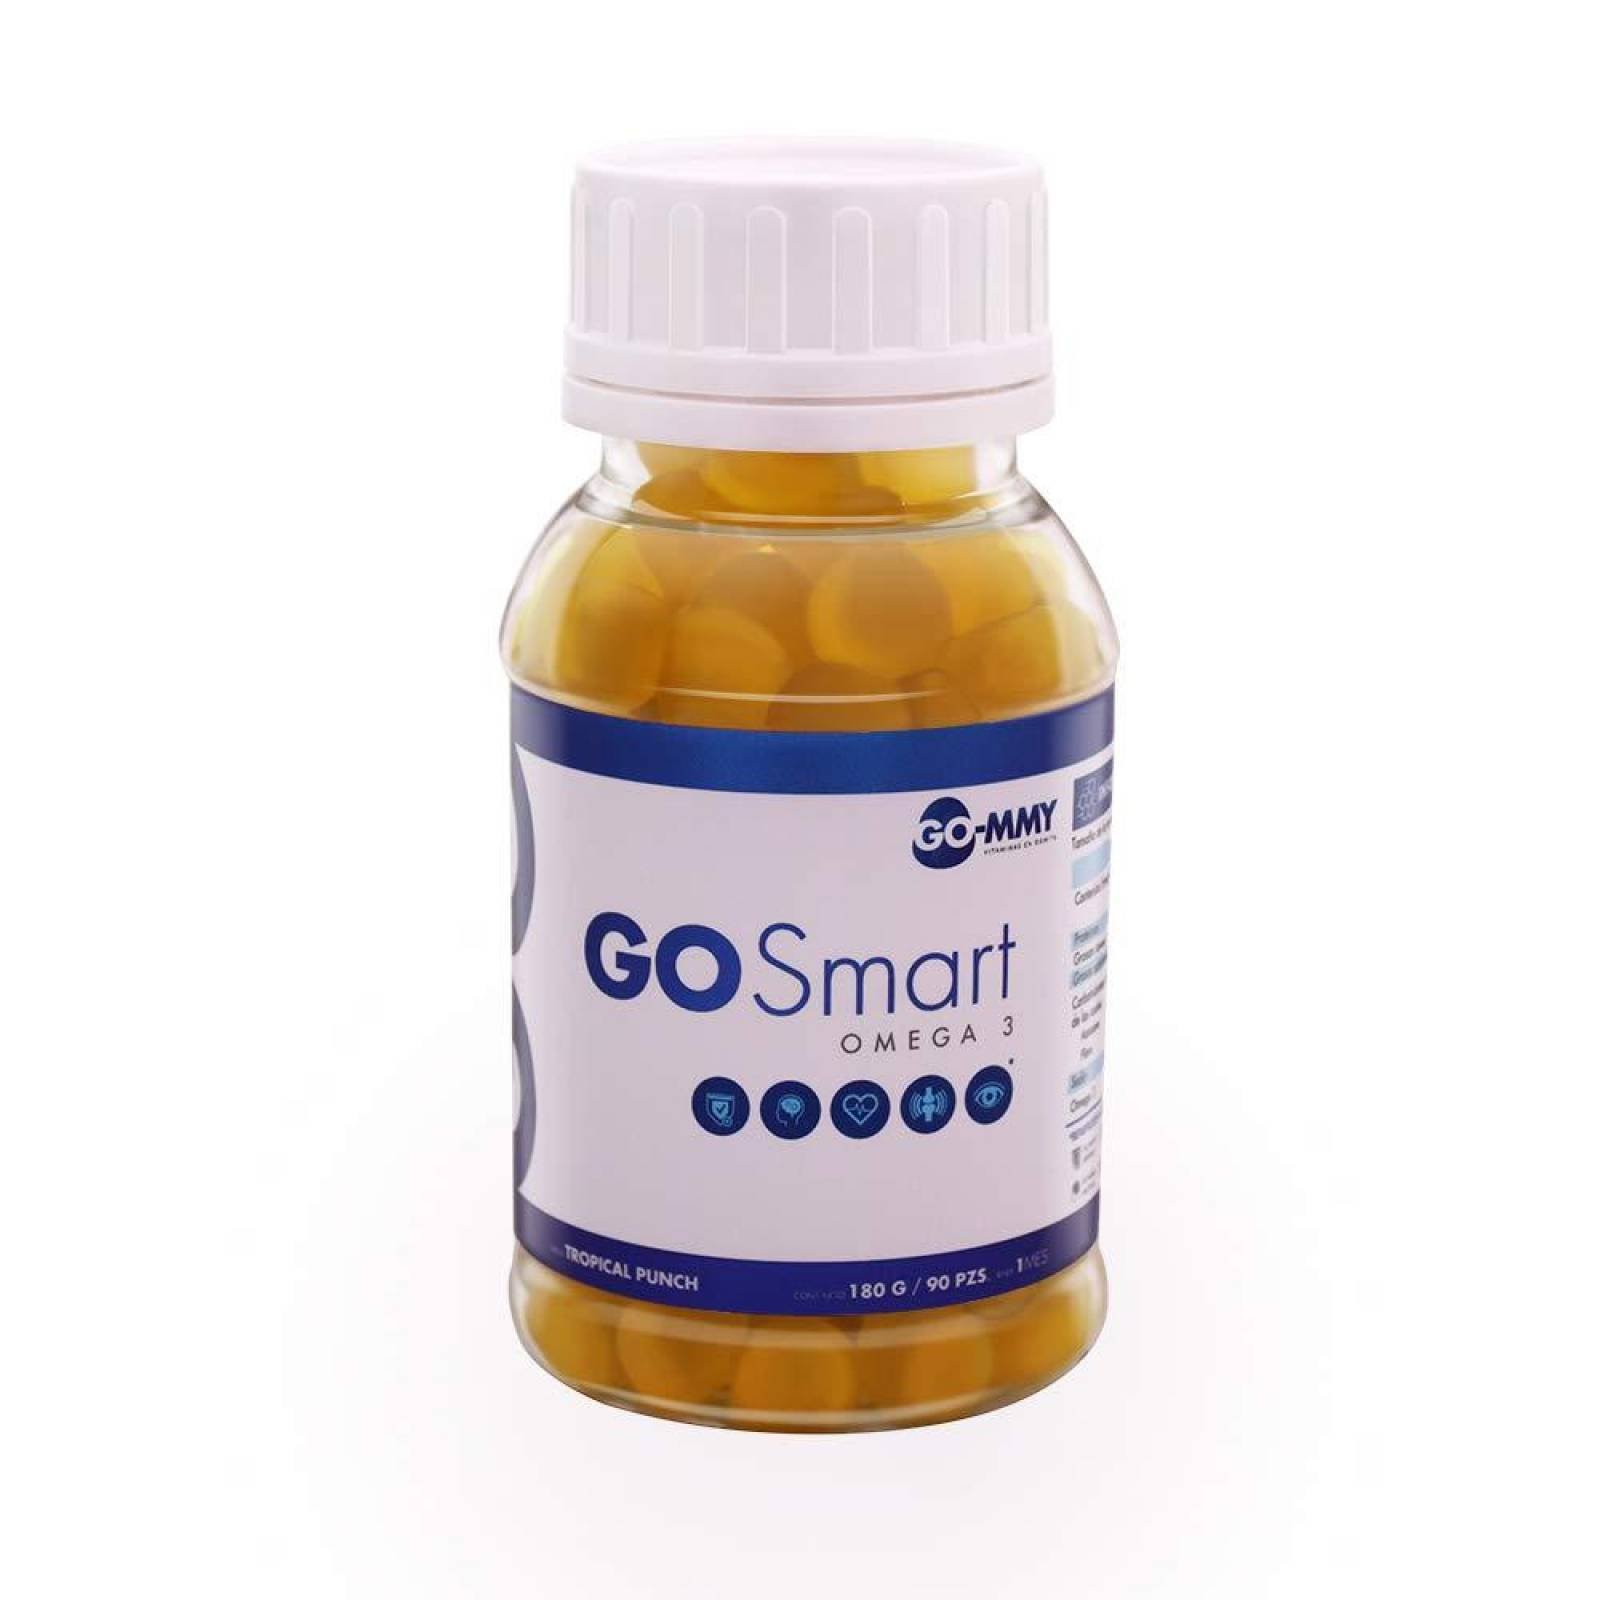 Omega 3 en gomitas GO-MMY GO Smart Tropical Punch